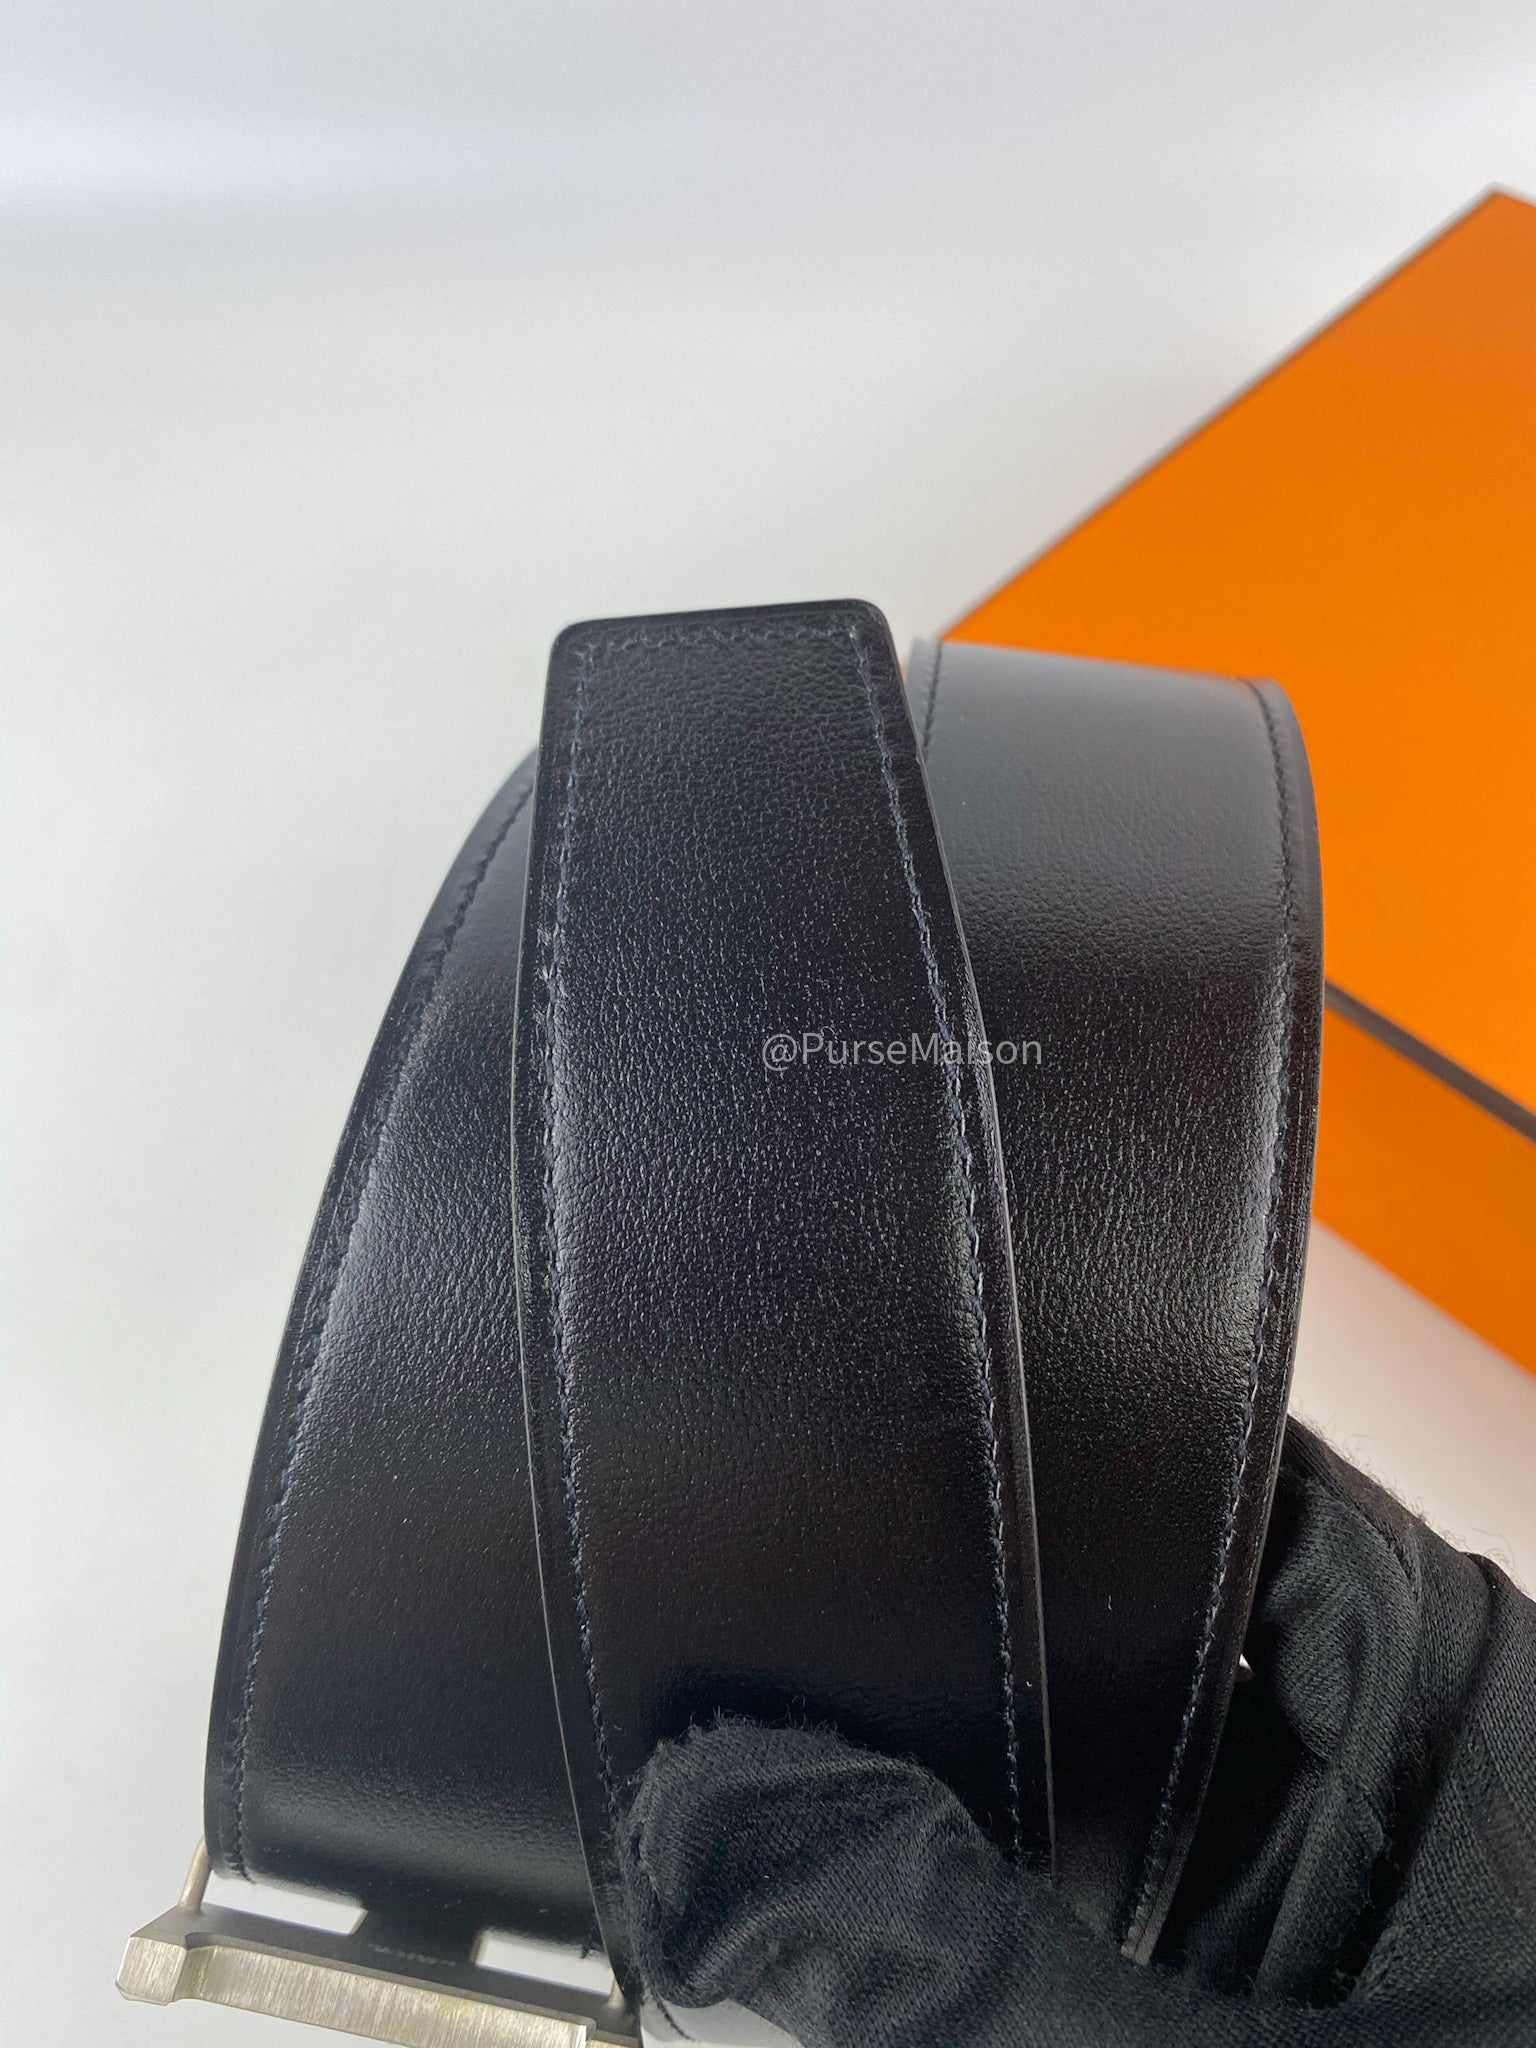 Hermes Constance 42mm Reversible Leather Belt Black/Chocolate